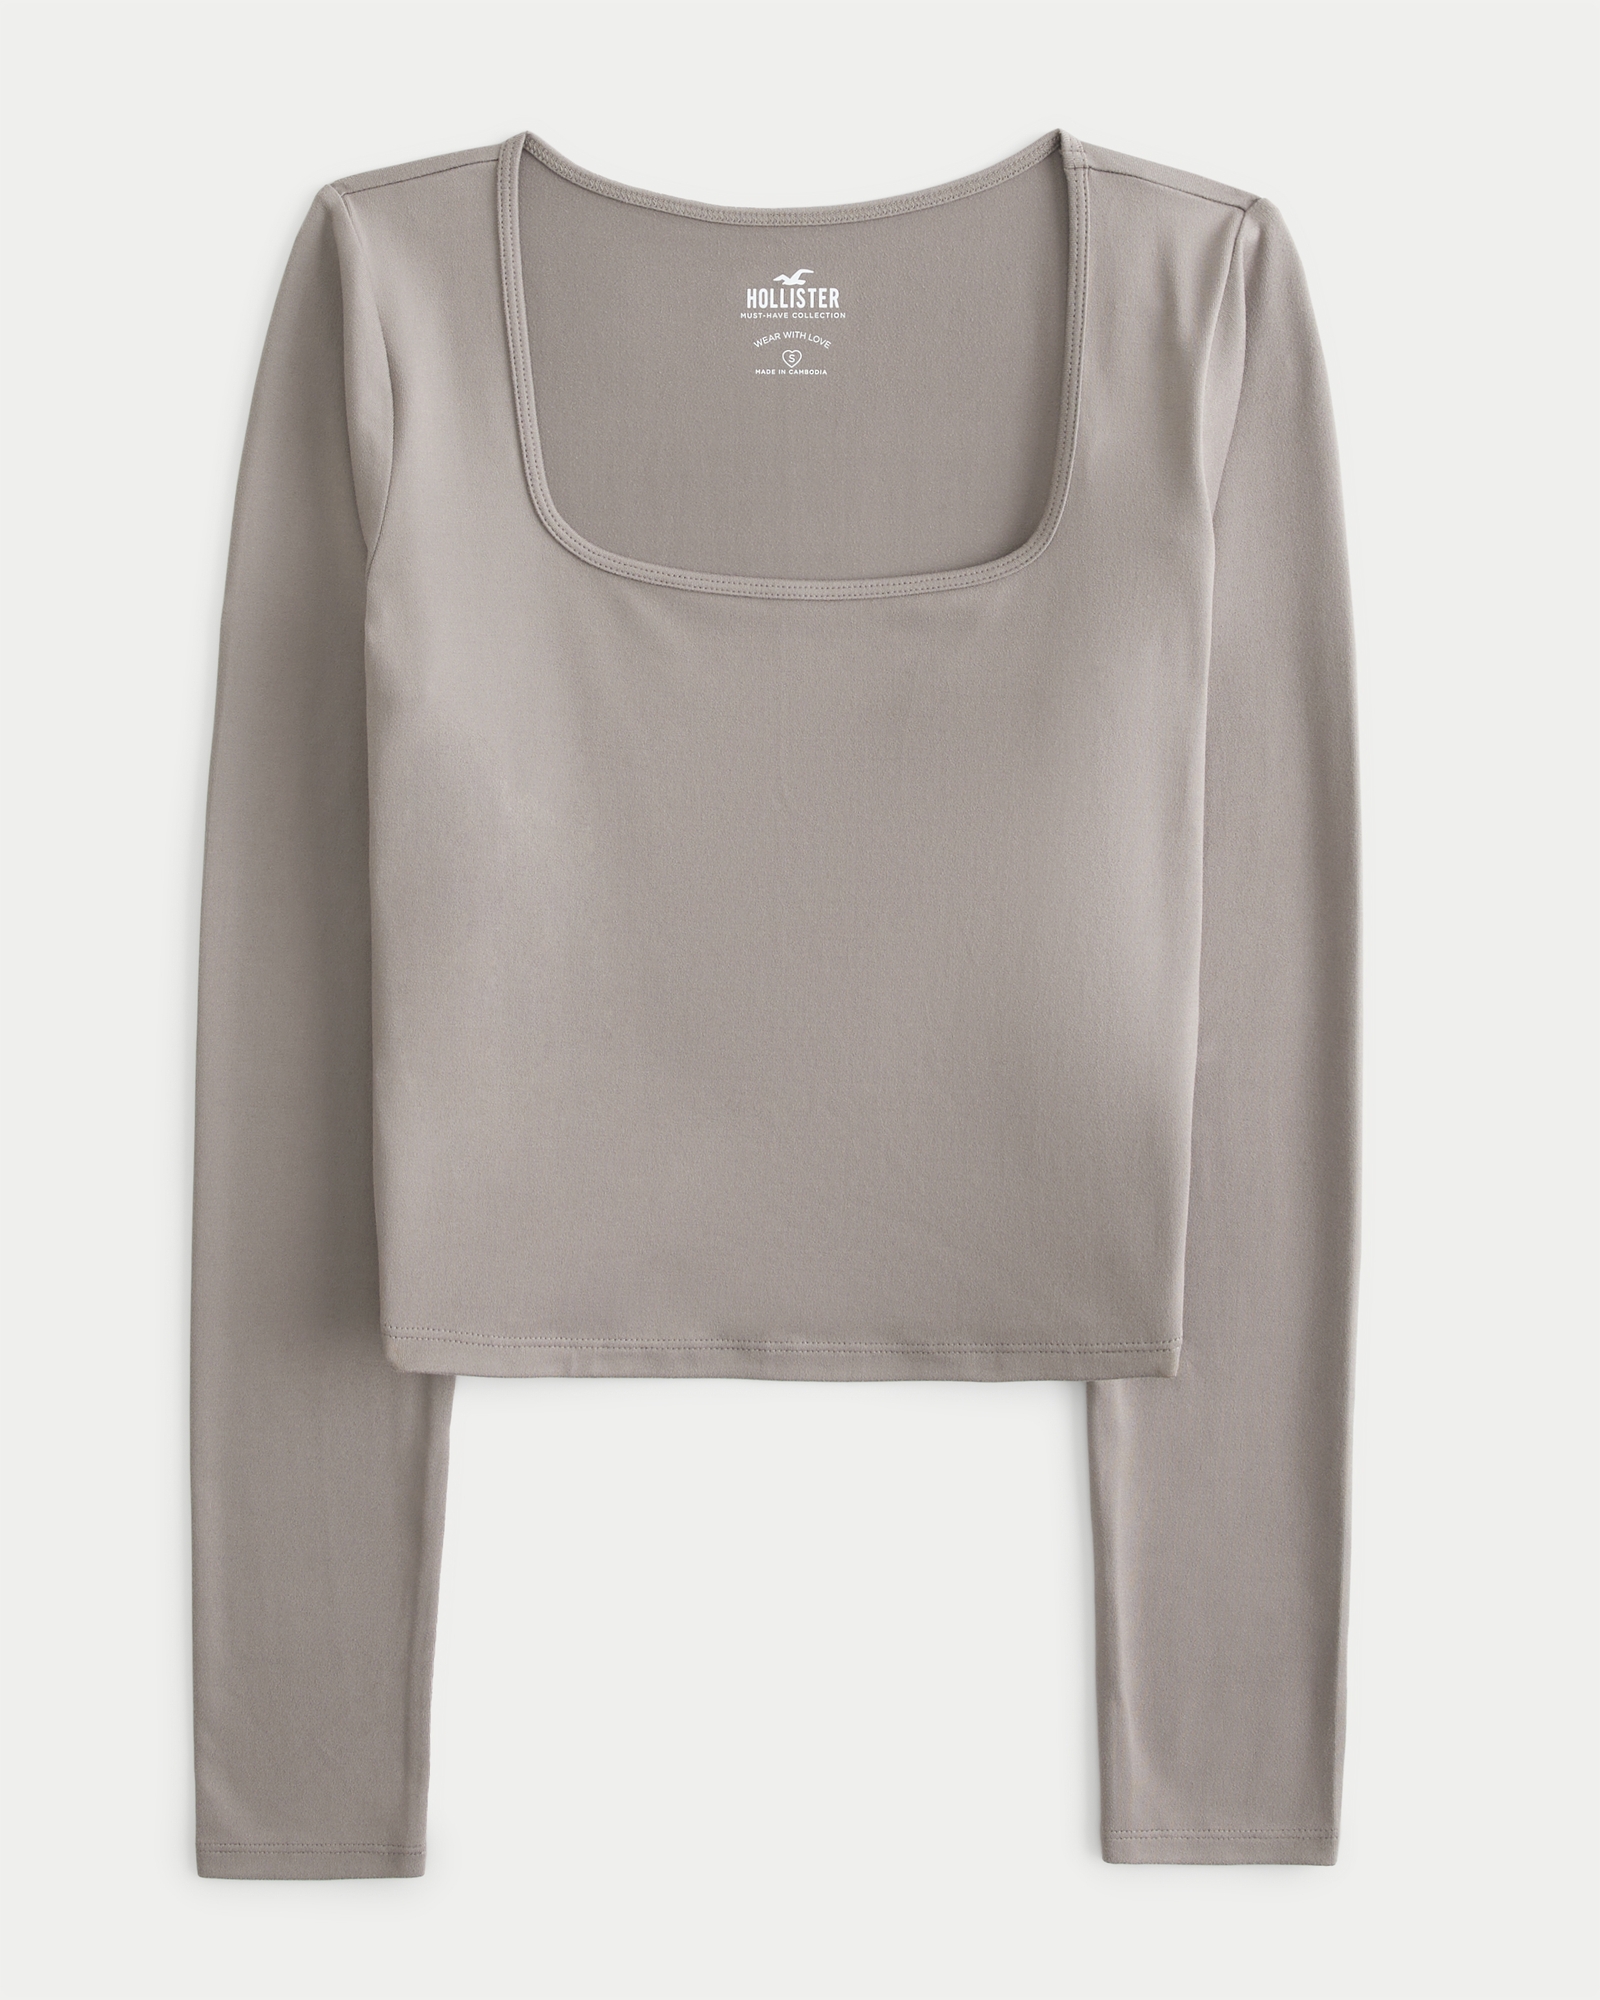 Hollister Ombre Graphic Long Sleeve T-Shirt Women's XS Beige